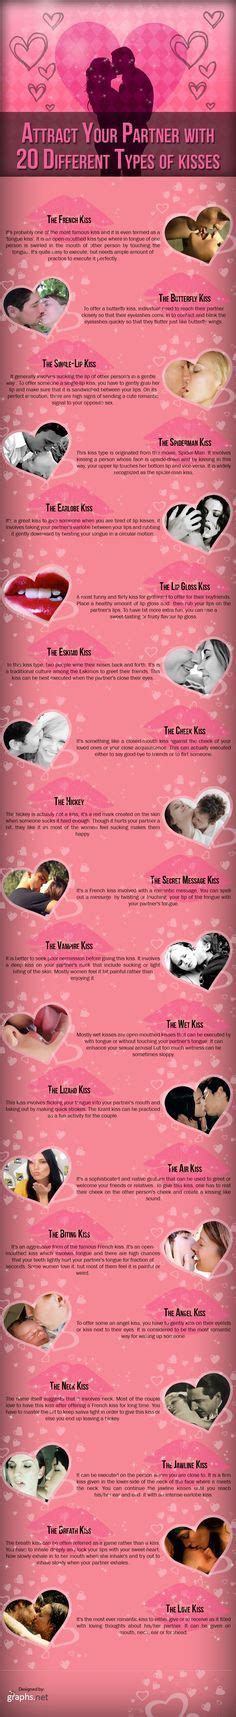 the 25 best types of kisses ideas on pinterest love types of kisses girl kissing guy and